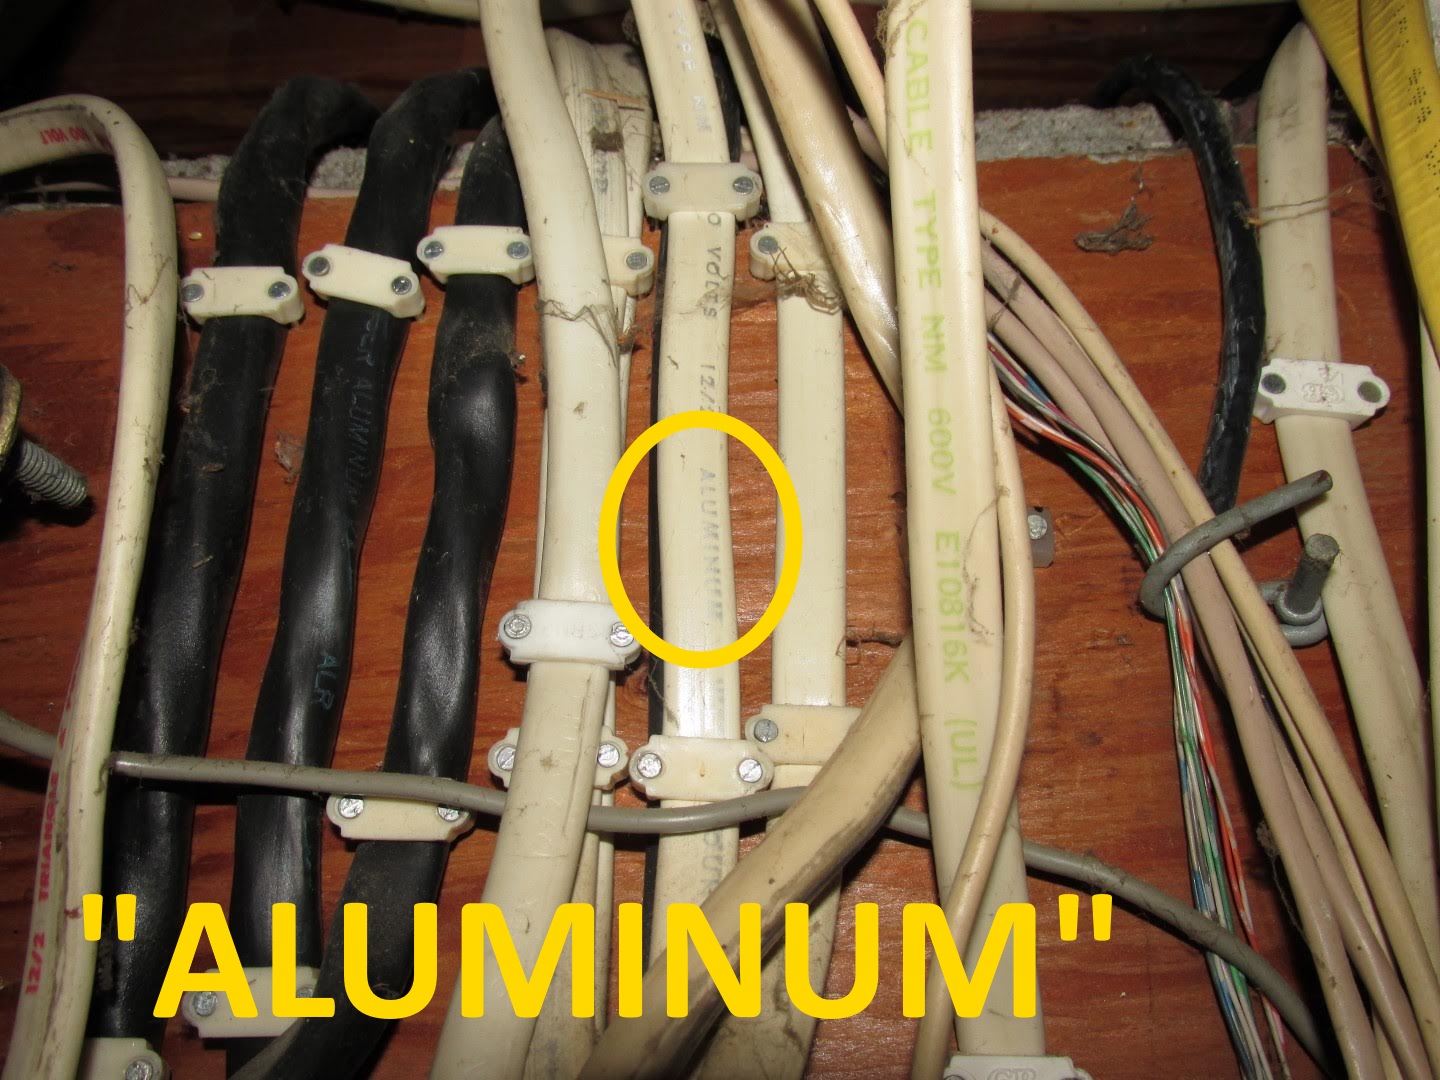 Hazards with aluminum wiring